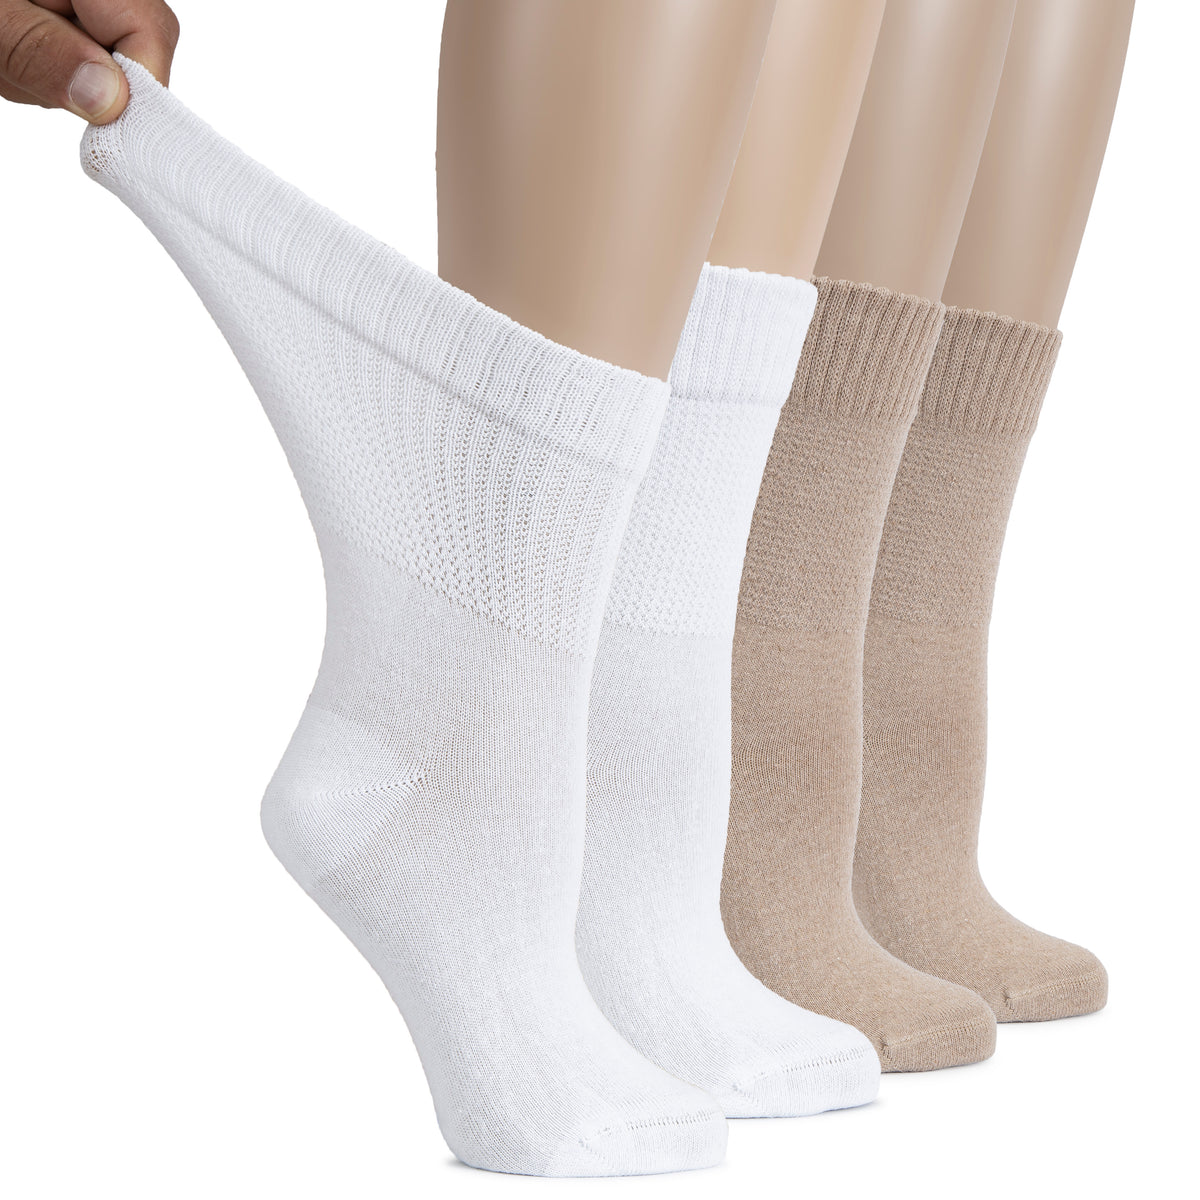 Hugh Ugoli Cotton Diabetic Women's Socks, Crew, Loose, Wide Stretchy, Thin, Seamless Toe and Non-Binding Top, 4 Pairs | Shoe Size: 6-9 | LightGrey / White